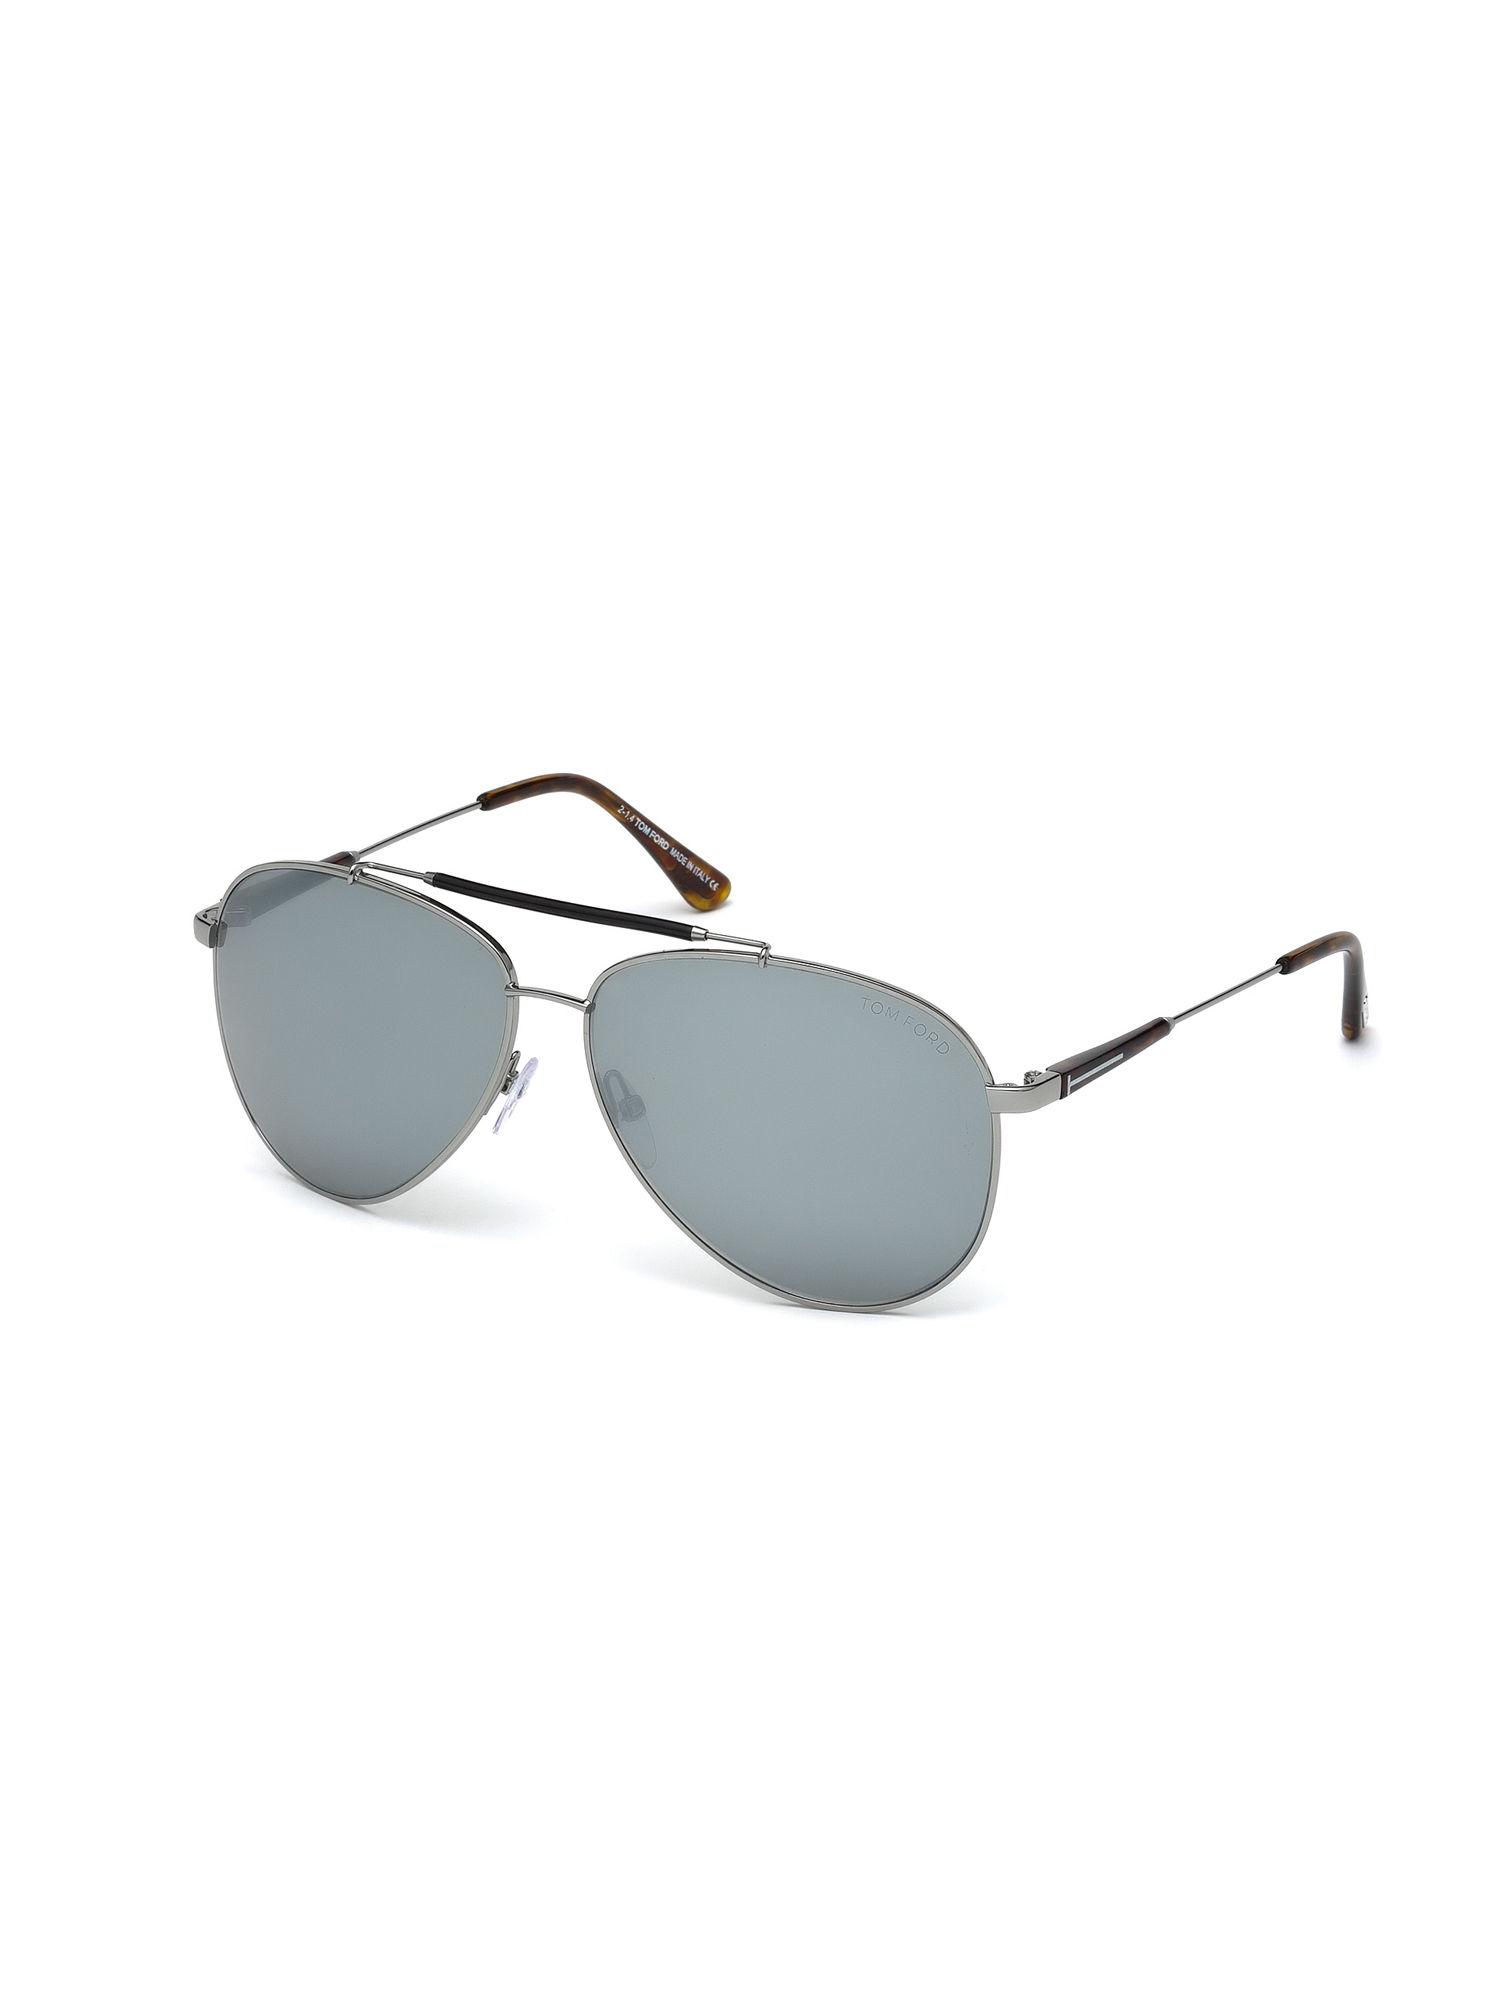 Silver Aviator Sunglasses - FT0378 62 14Q